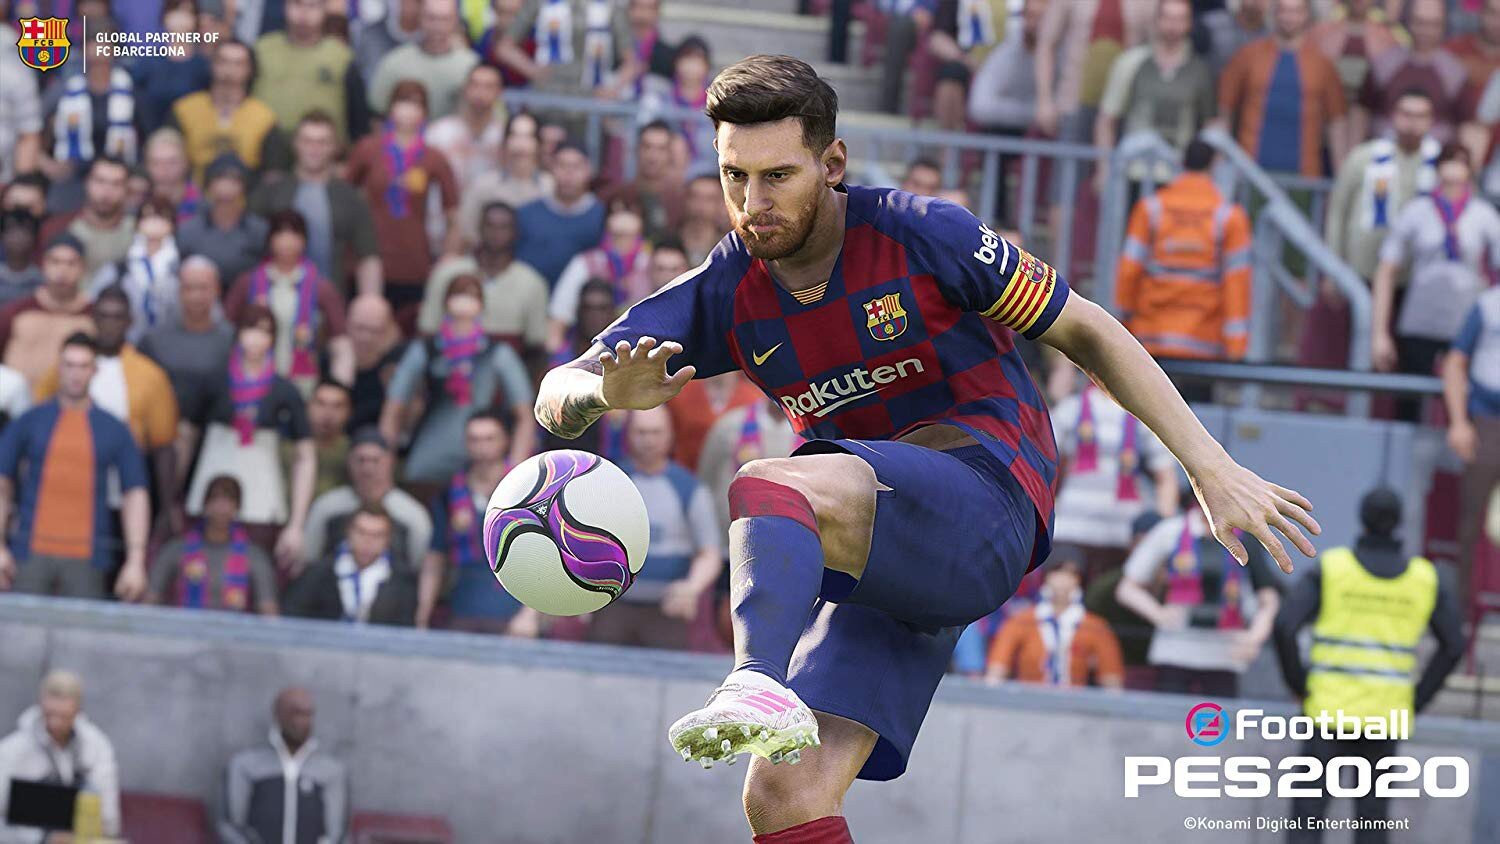 Pro Evolution Soccer 2020 (PS4) цена и информация | Kompiuteriniai žaidimai | pigu.lt